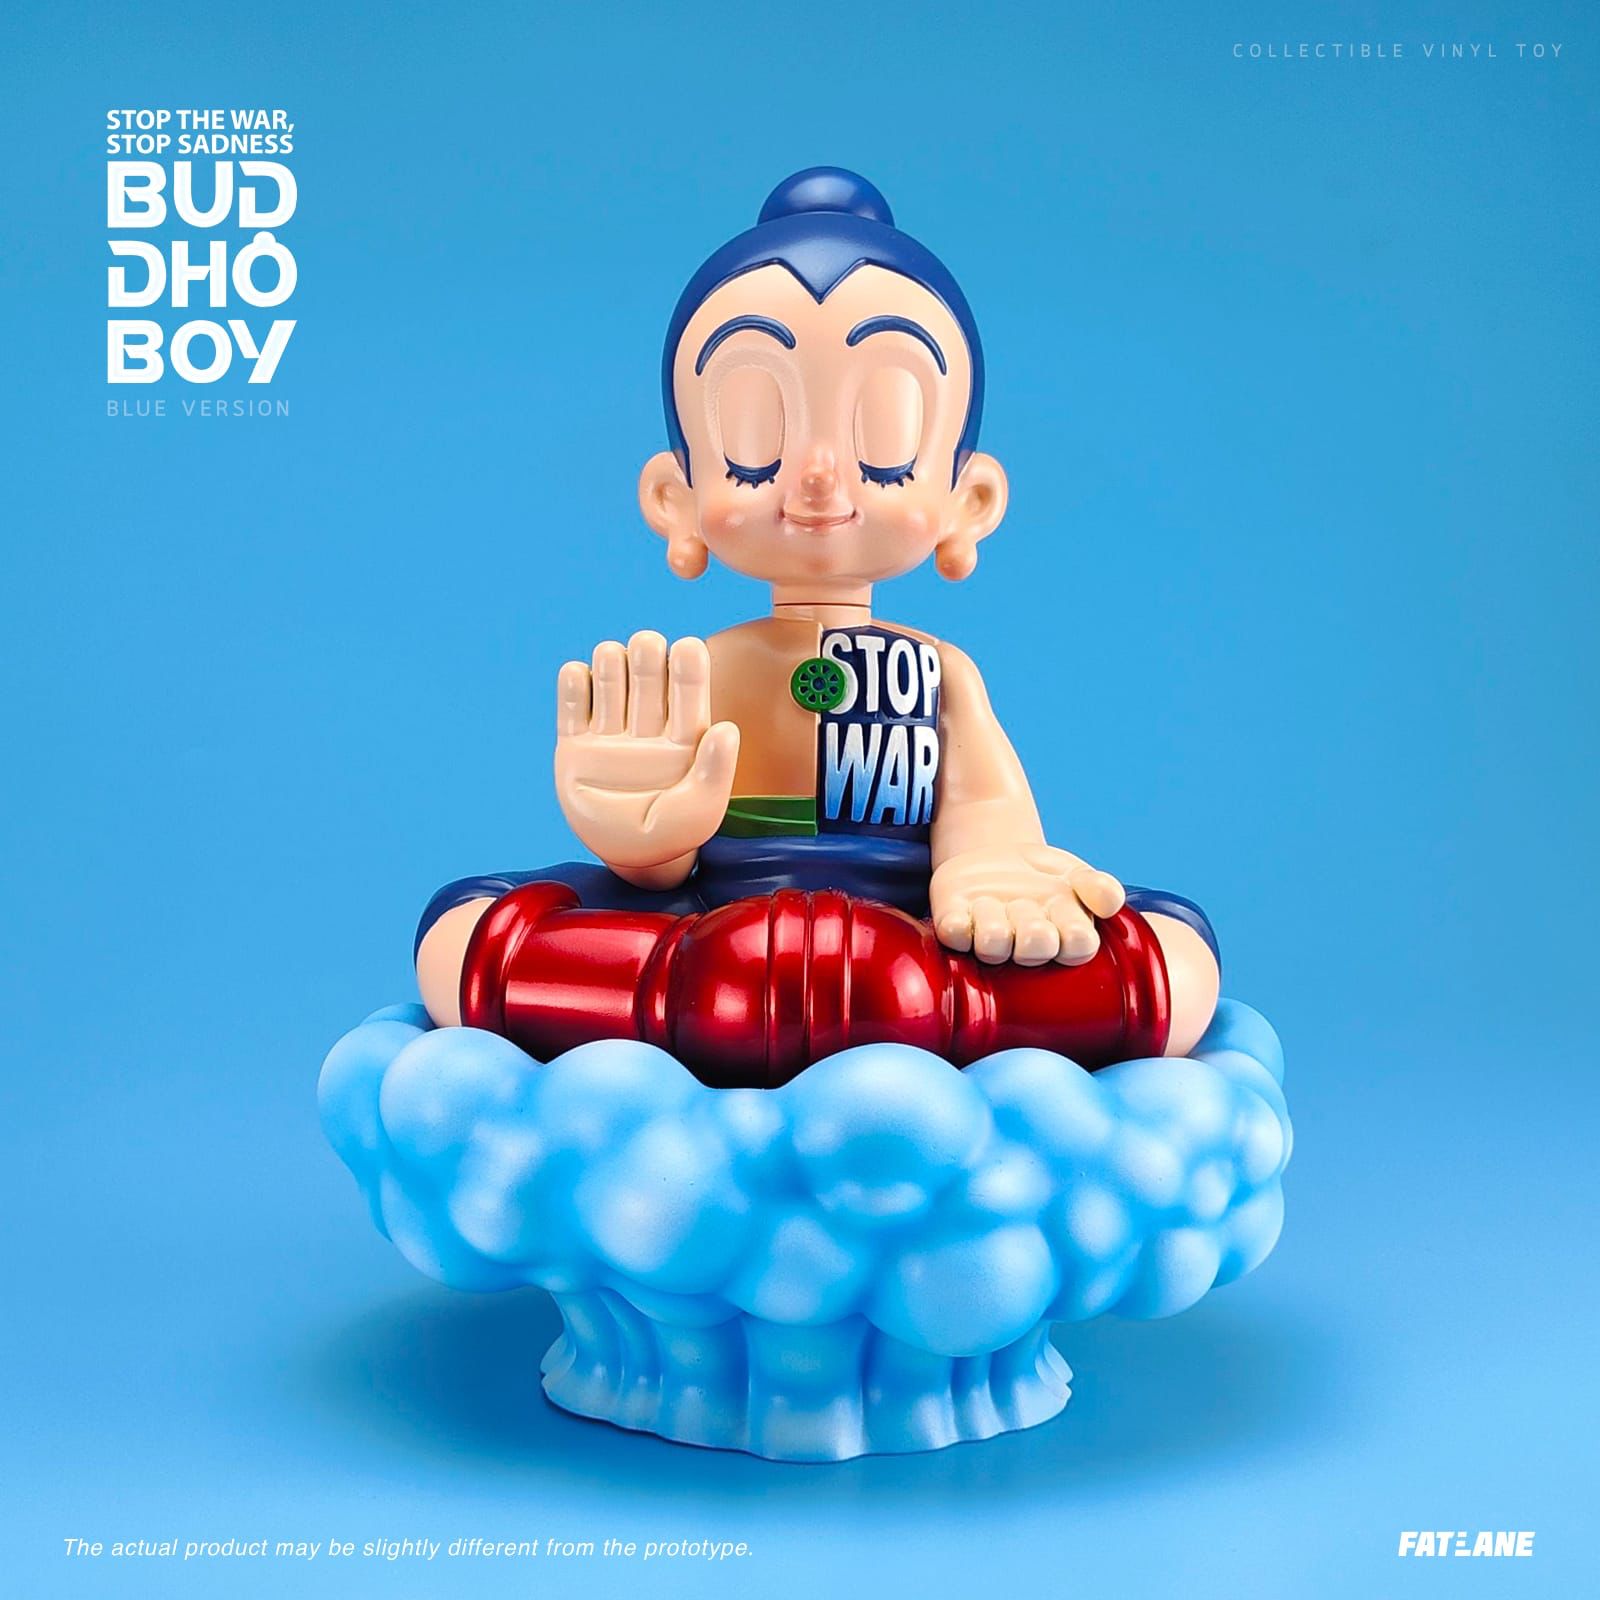 BLUE BUDDHO BOY